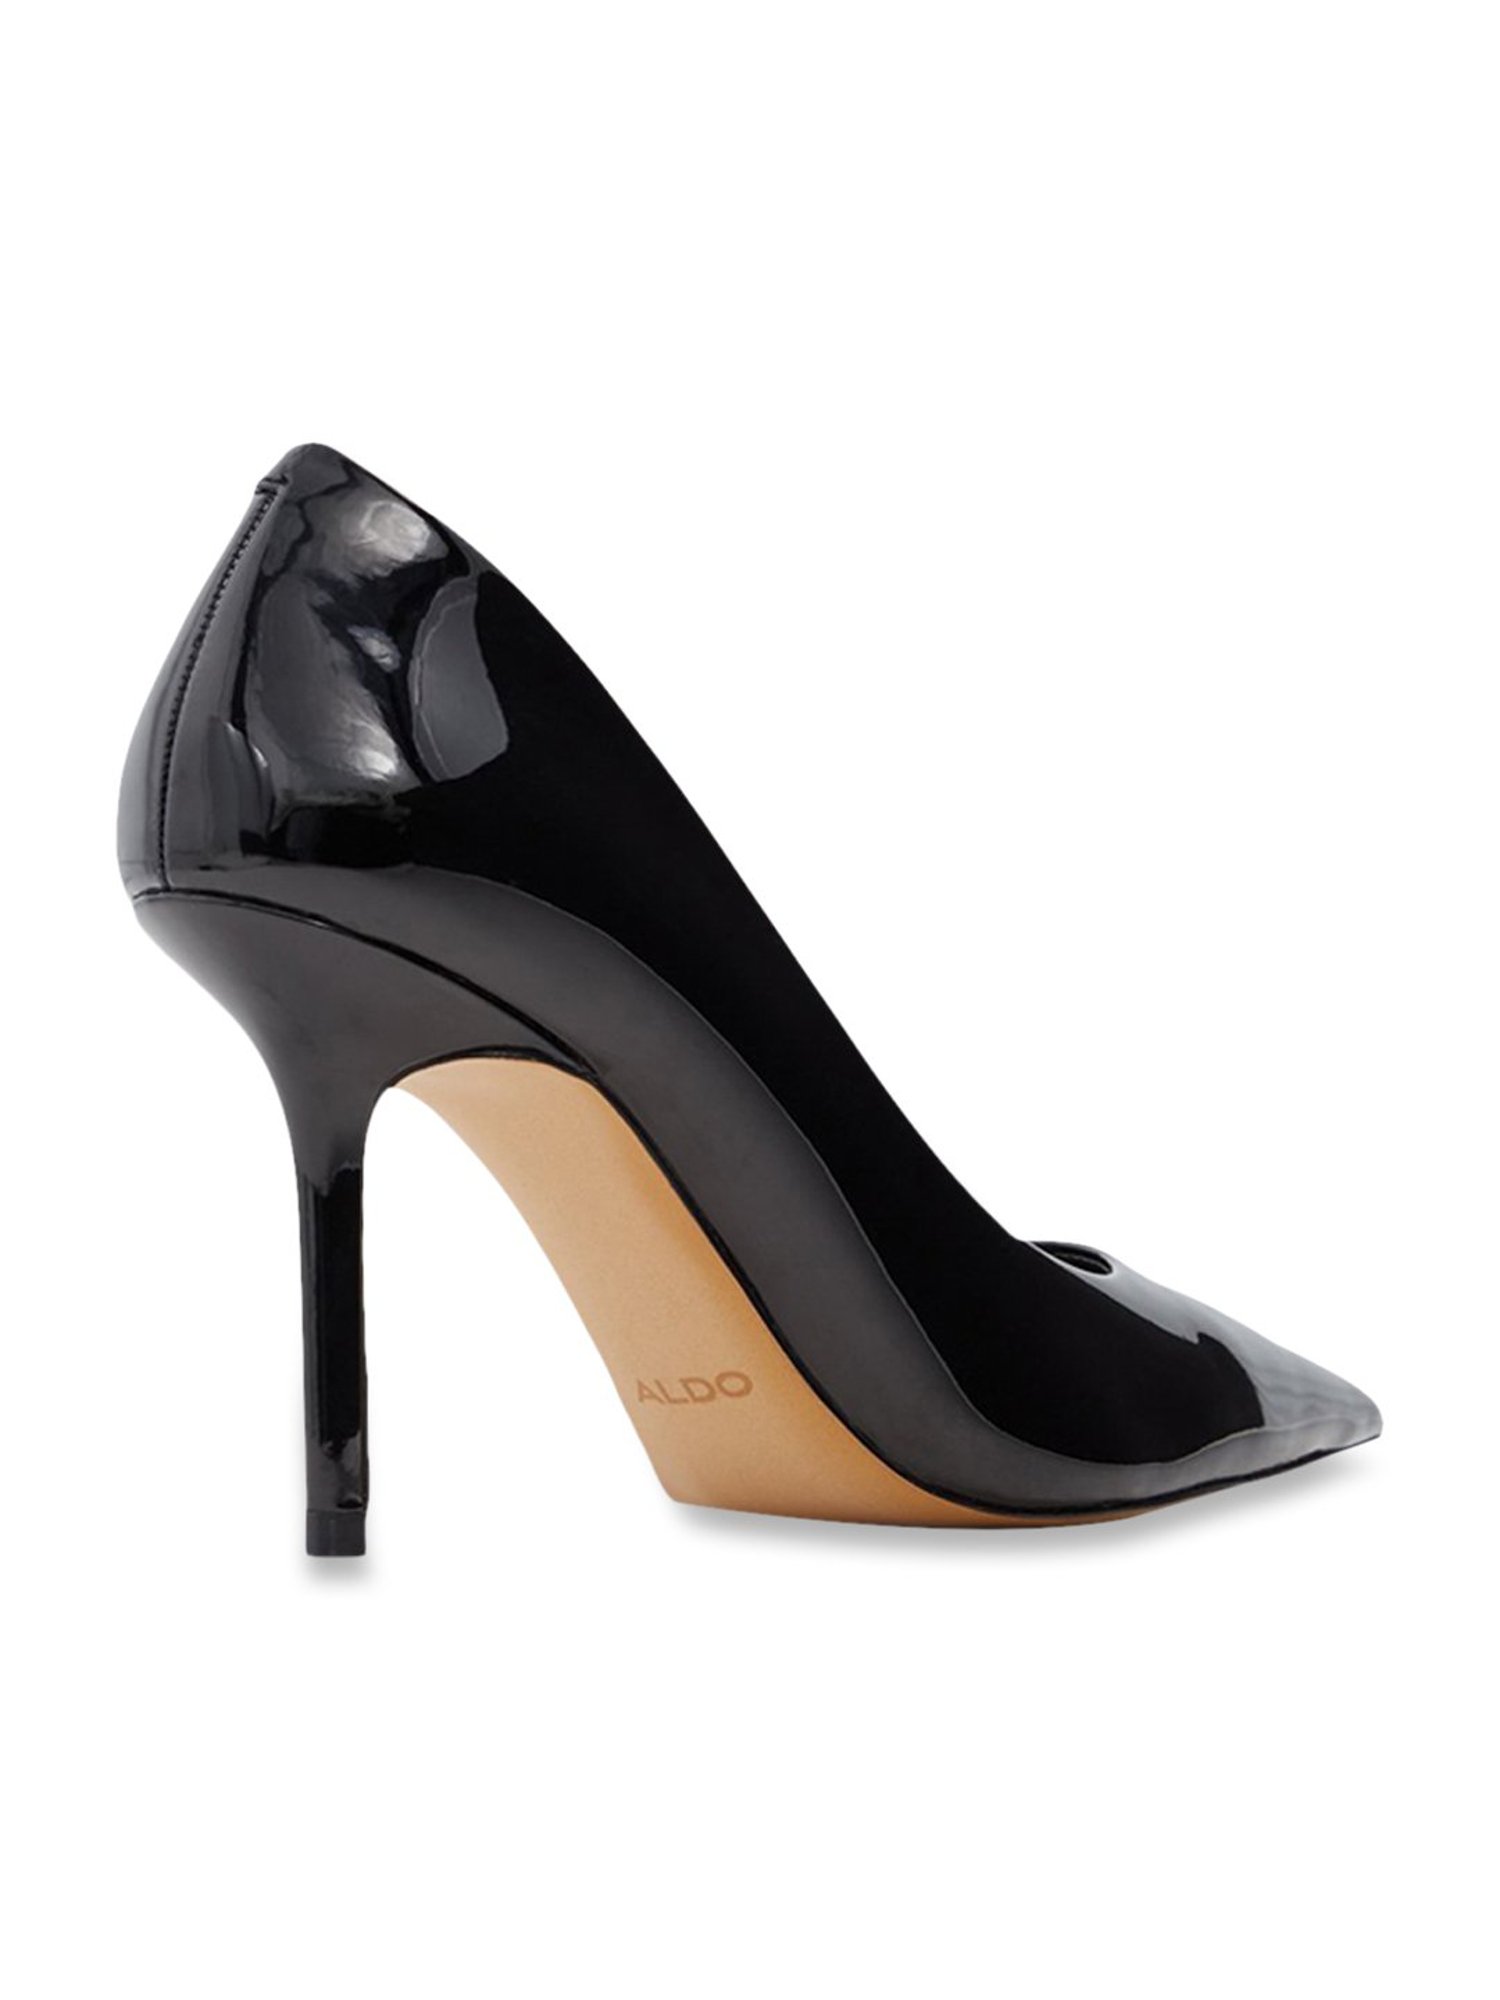 ALDO Ralivia heeled pumps in black | ASOS